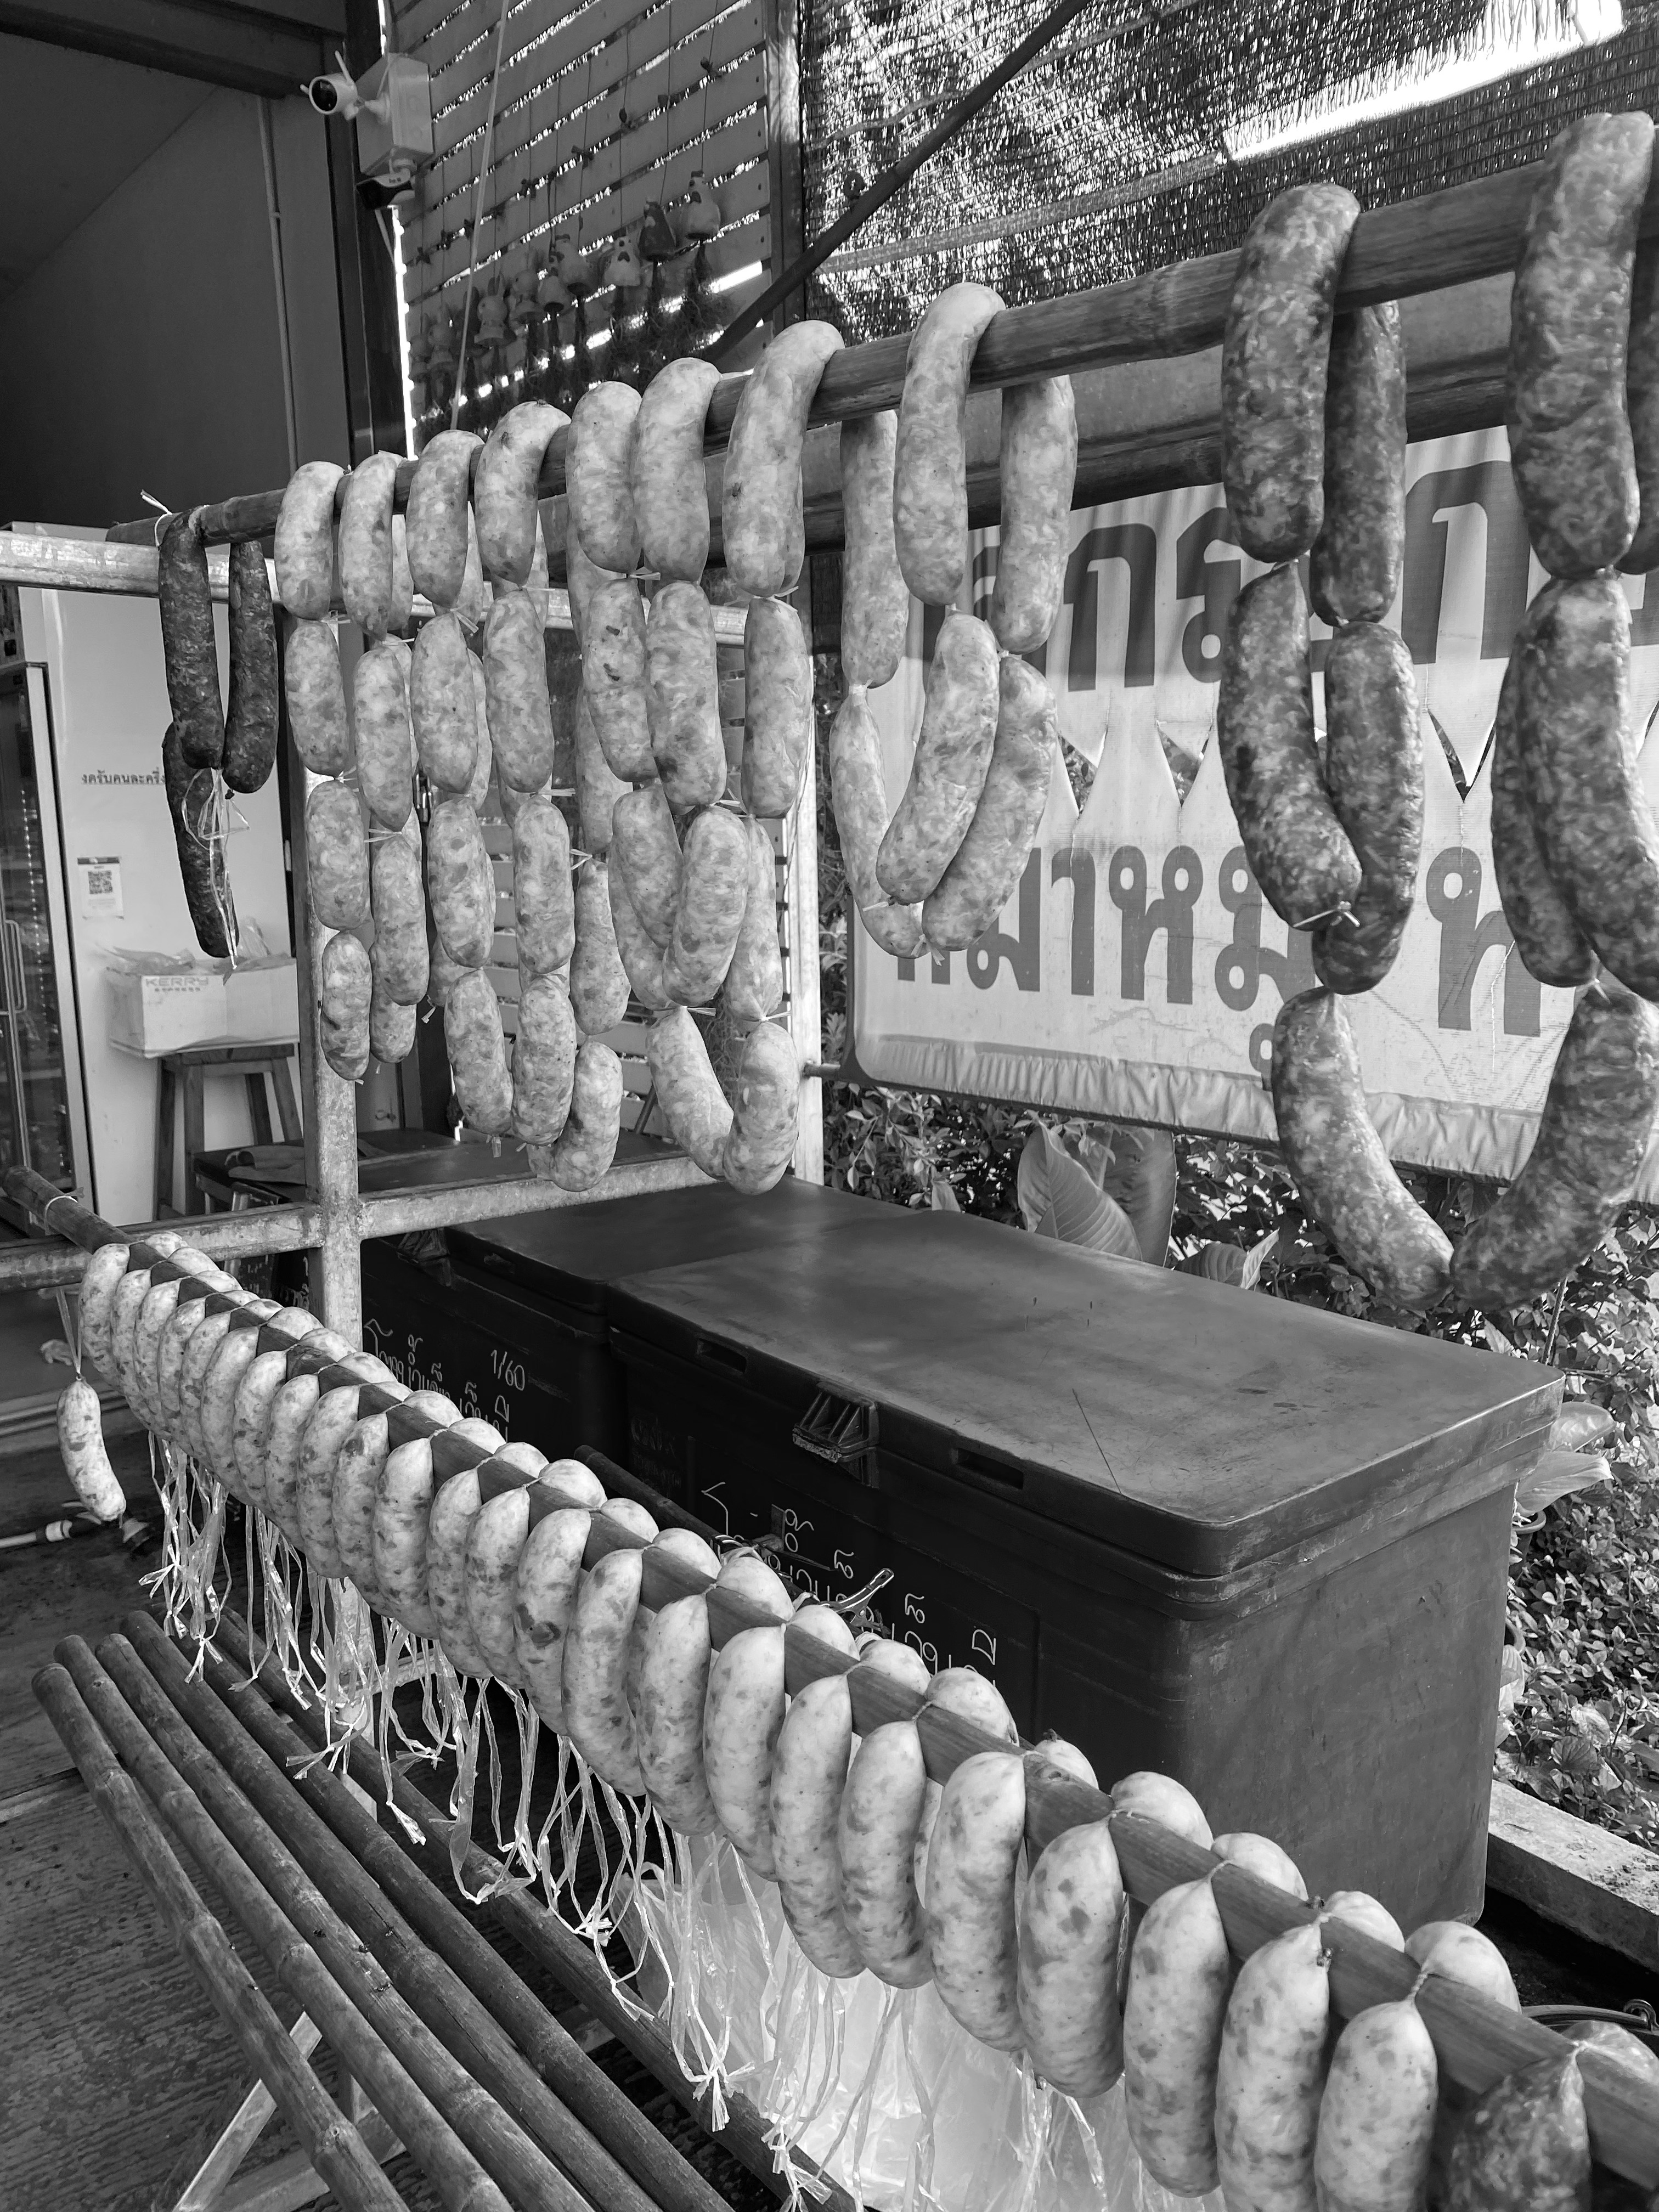 Sampling sausage meat from the popular roadside food carts